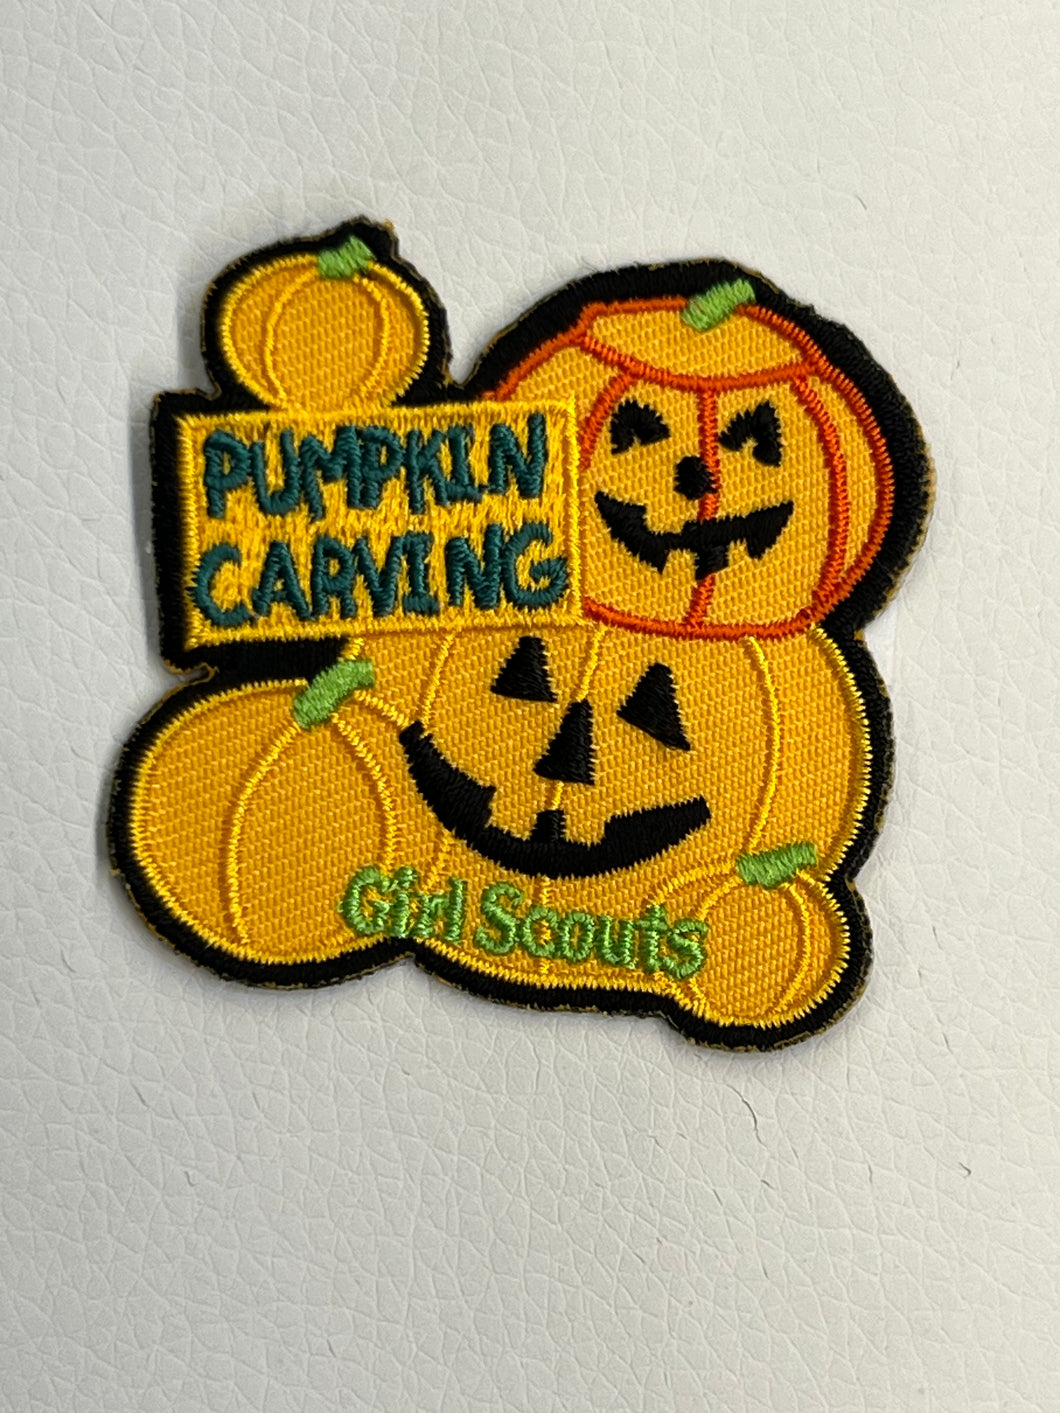 Pumpkin carving patch